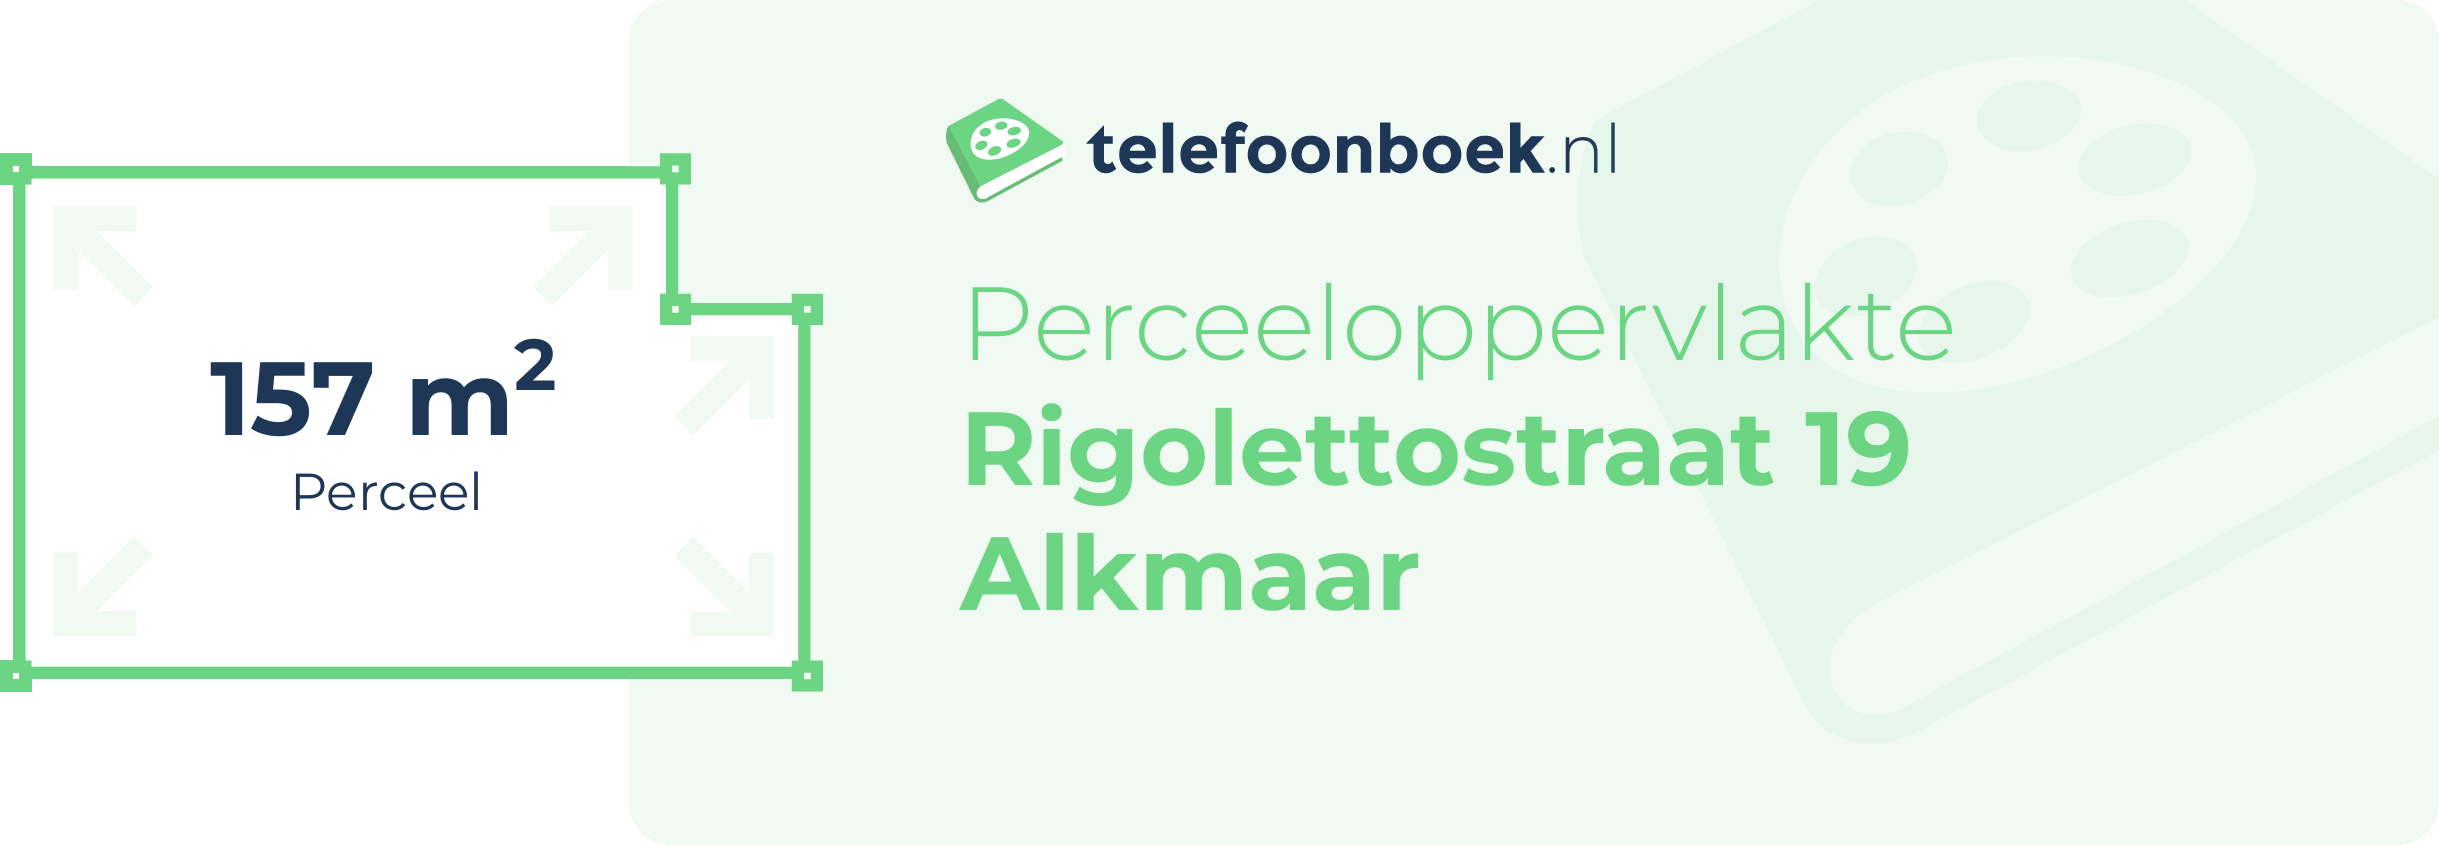 Perceeloppervlakte Rigolettostraat 19 Alkmaar